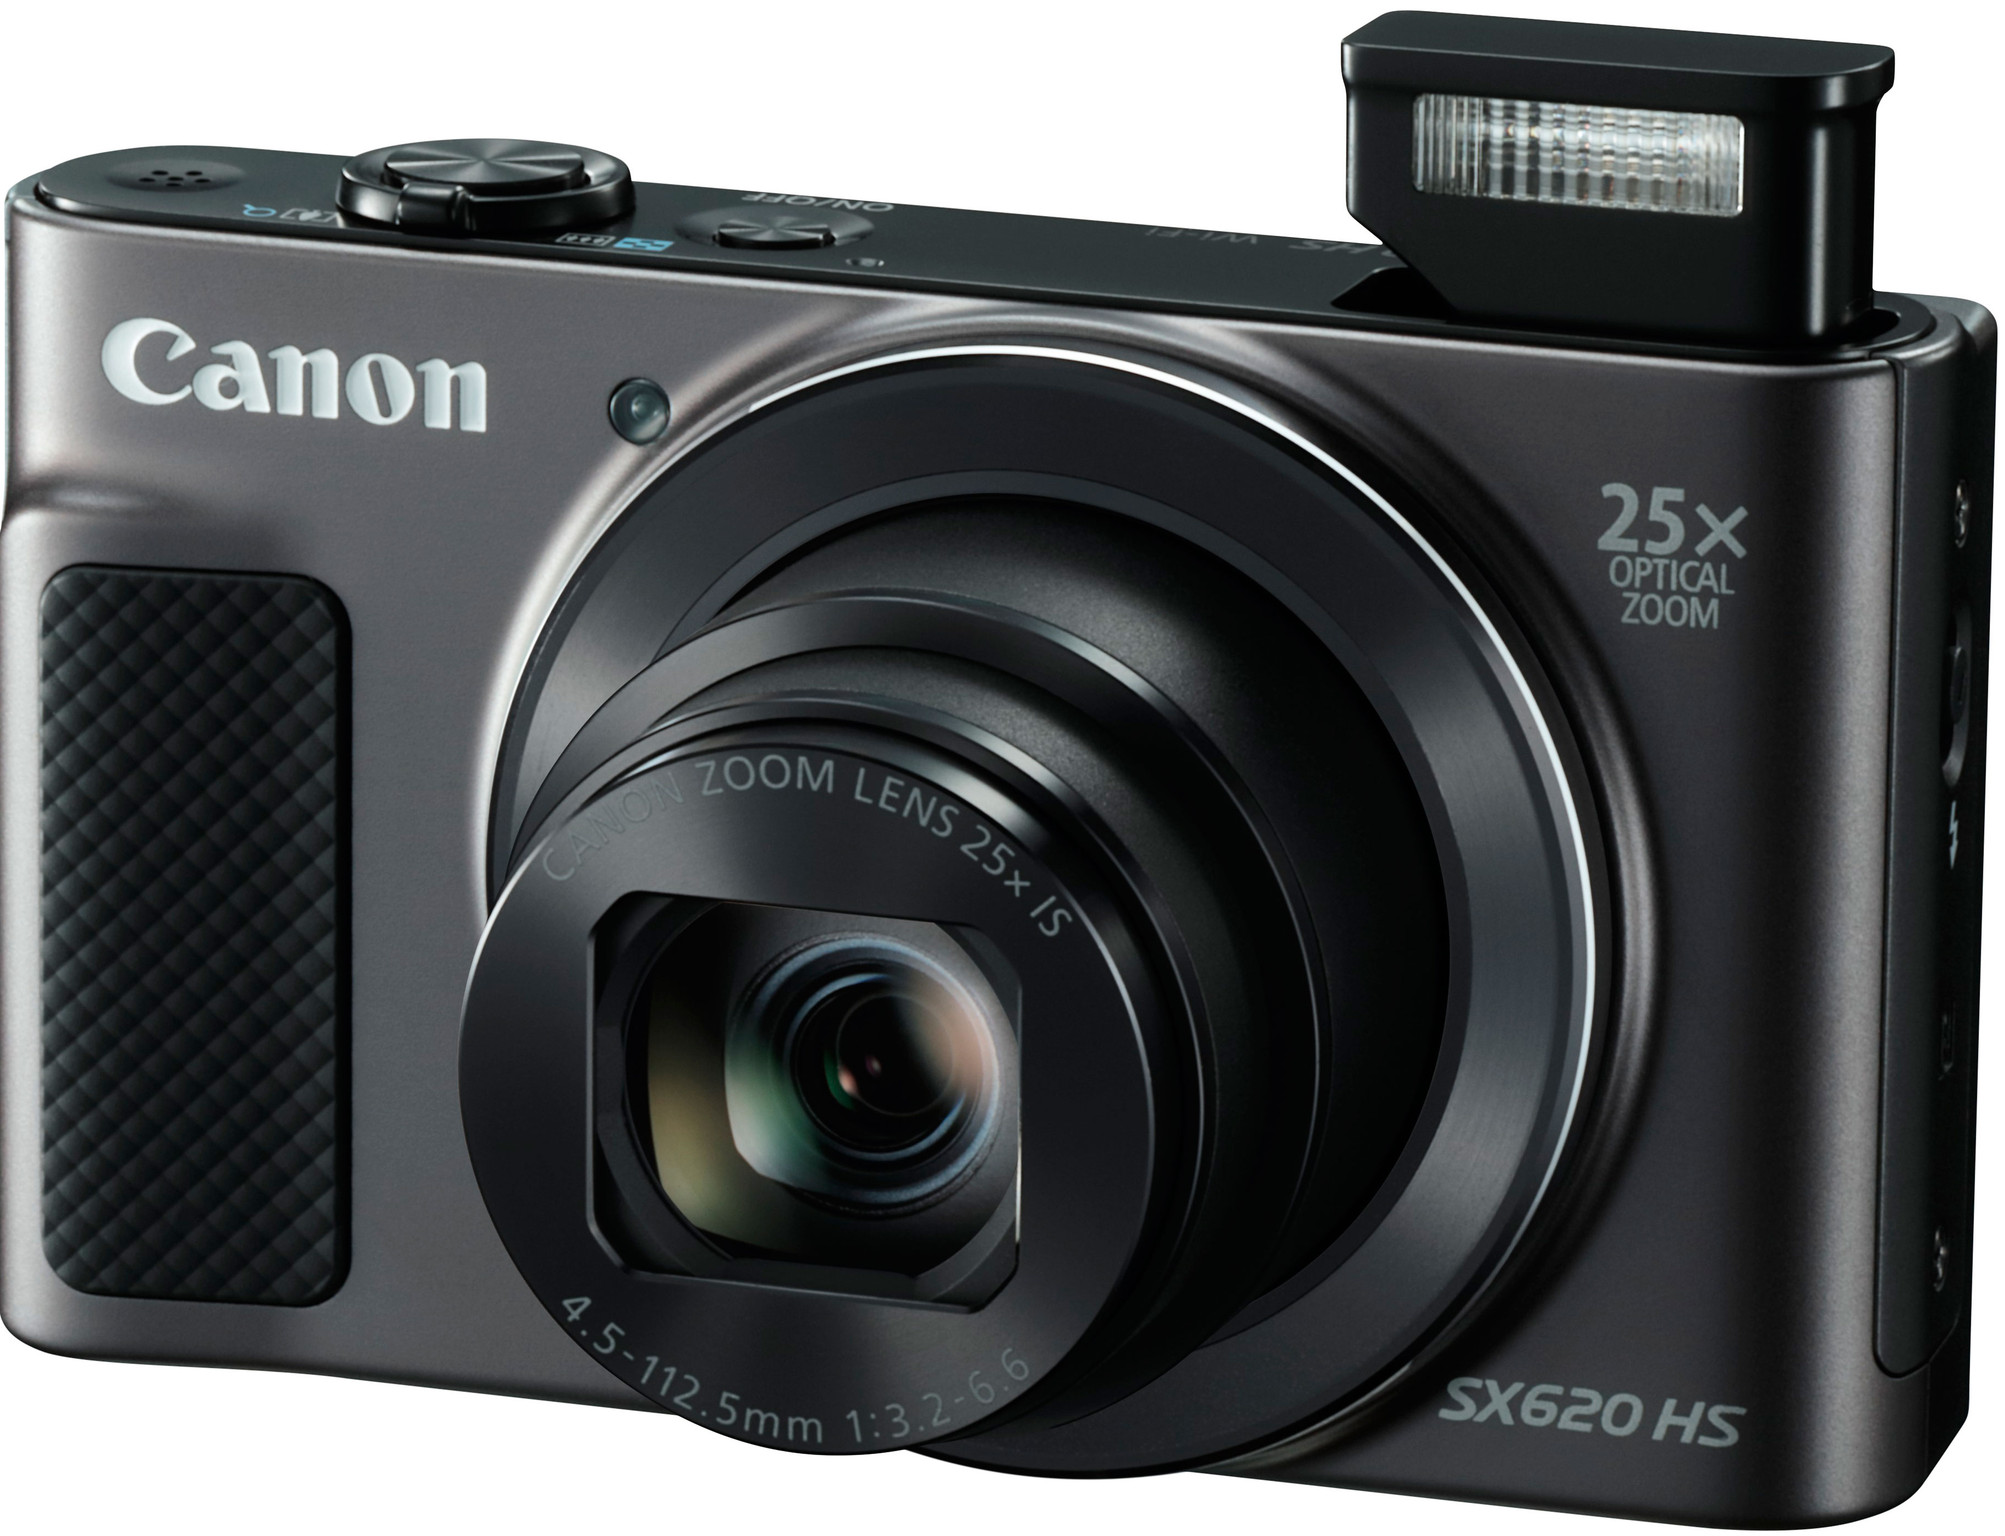 Canon-Powershot-SX620-HS-compactcamera-cameradeals.be